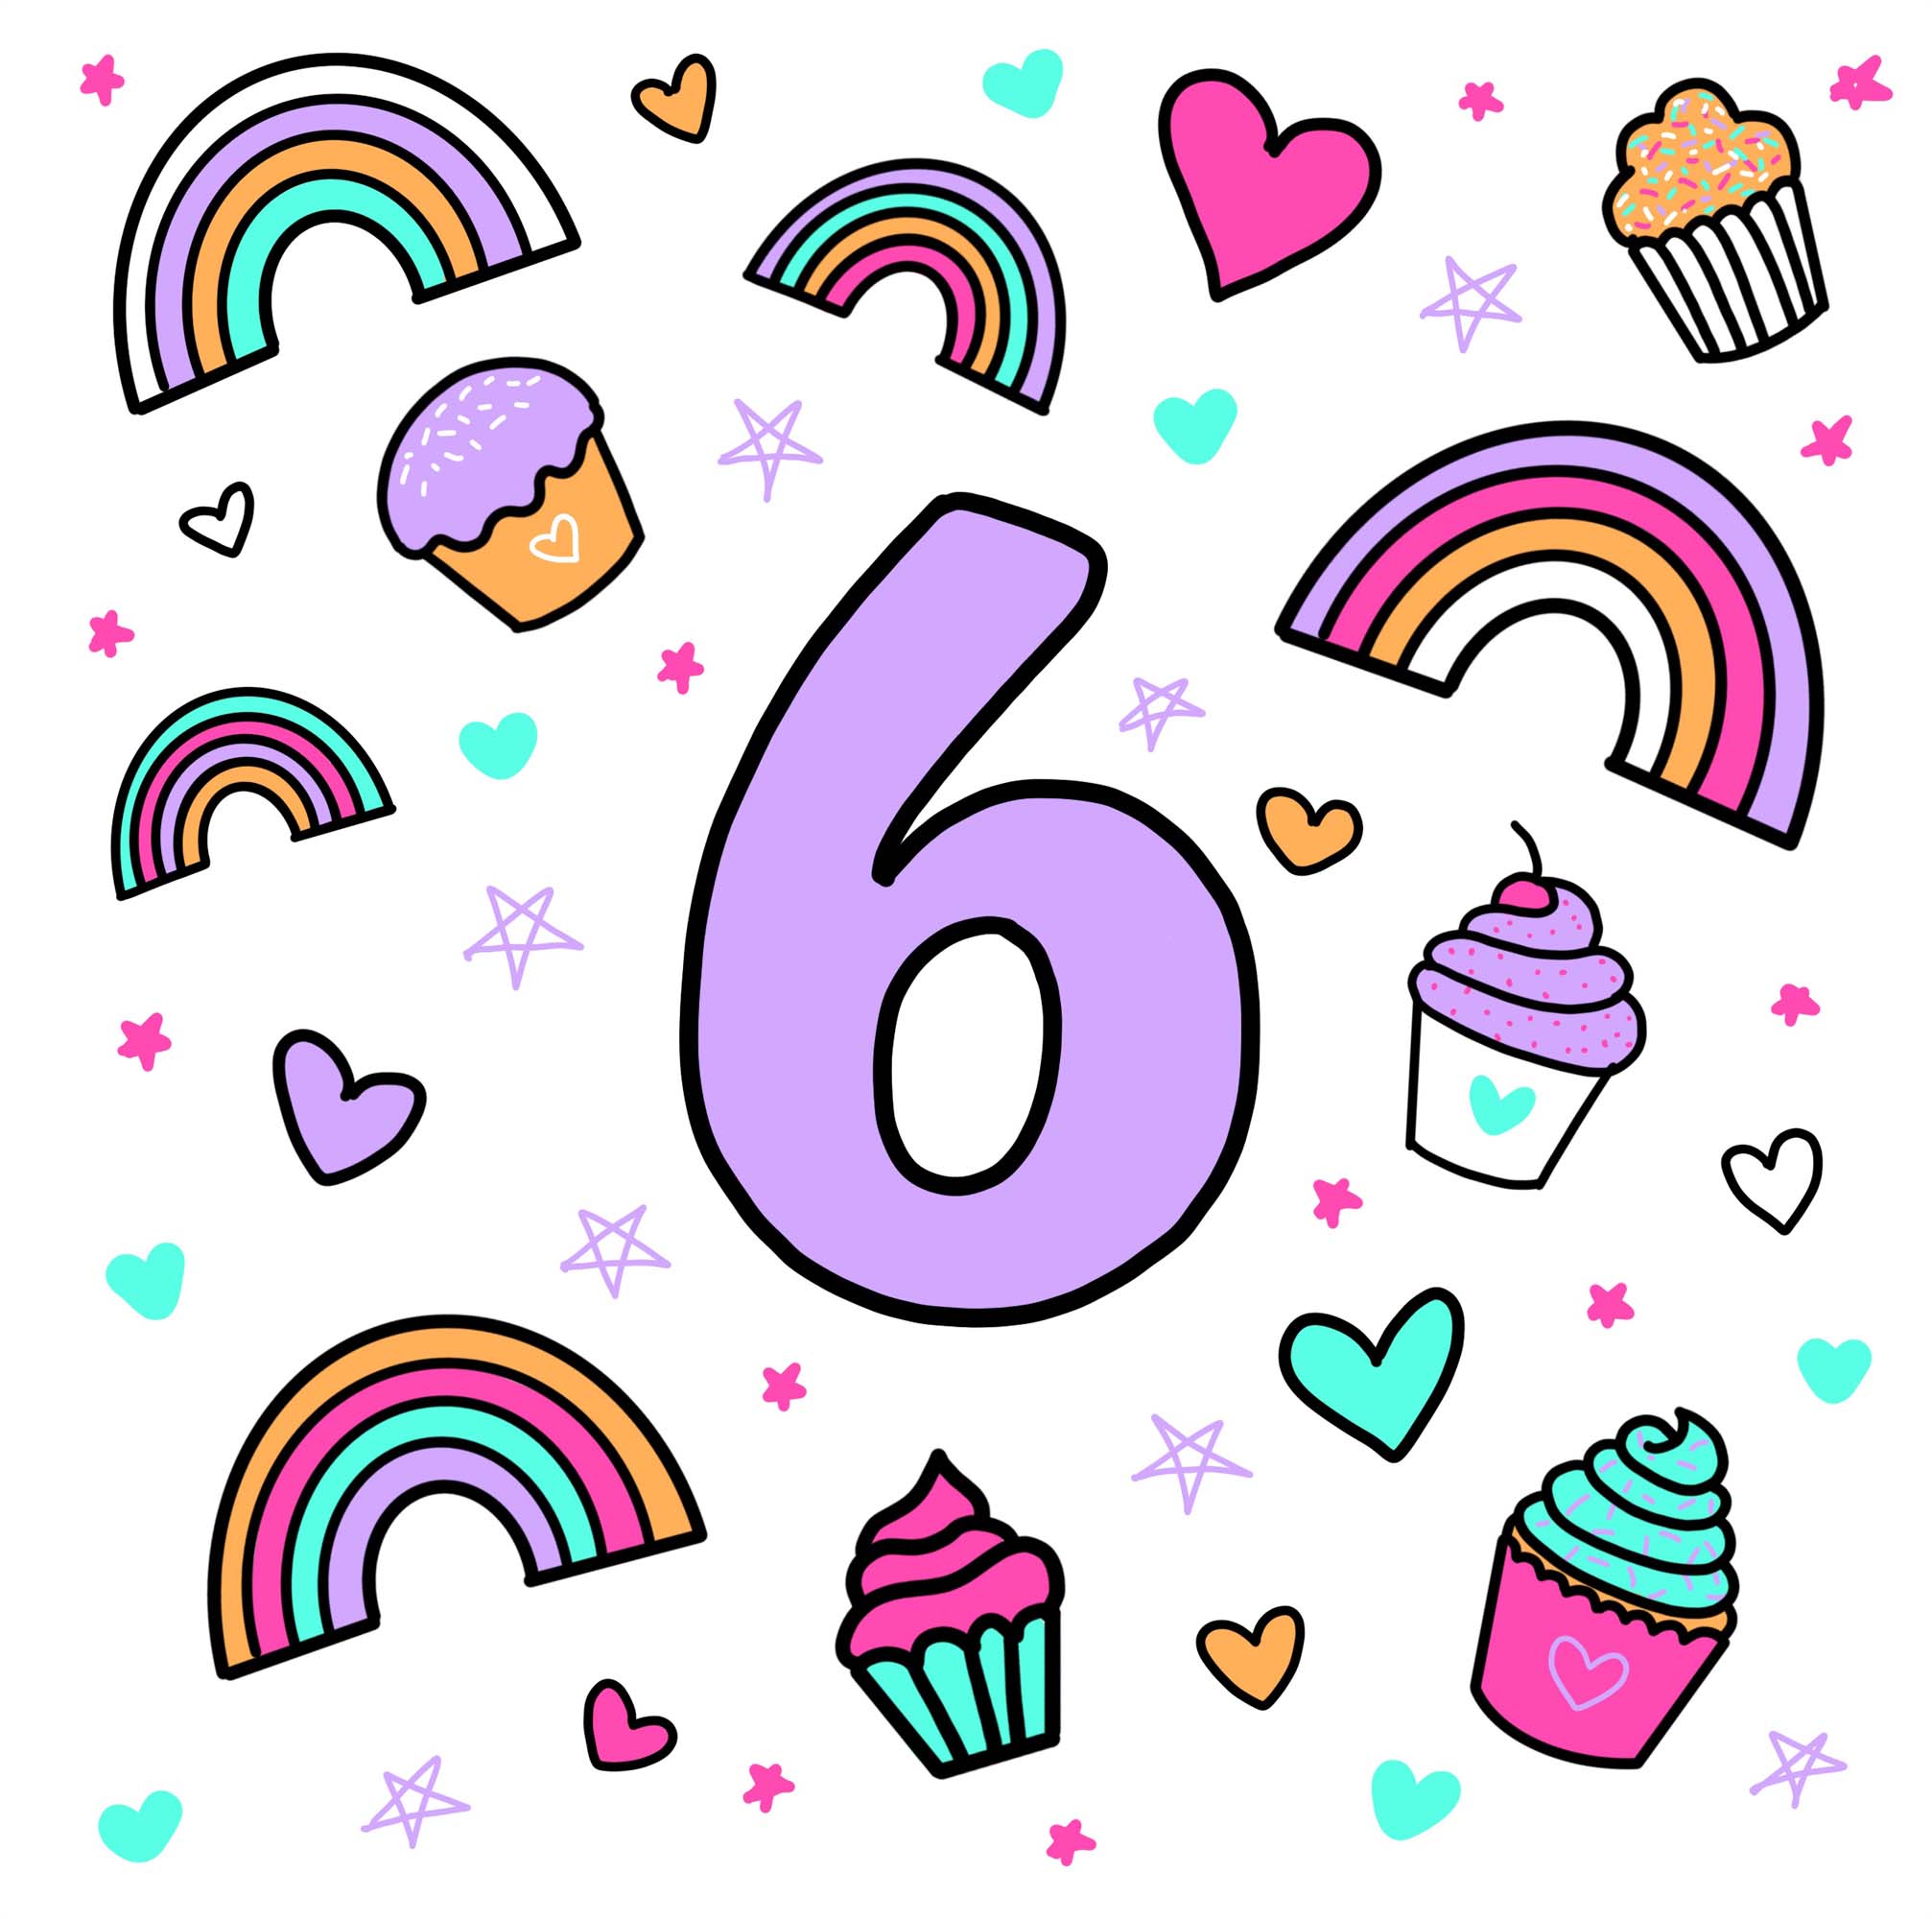 6th Birthday Rainbows Card